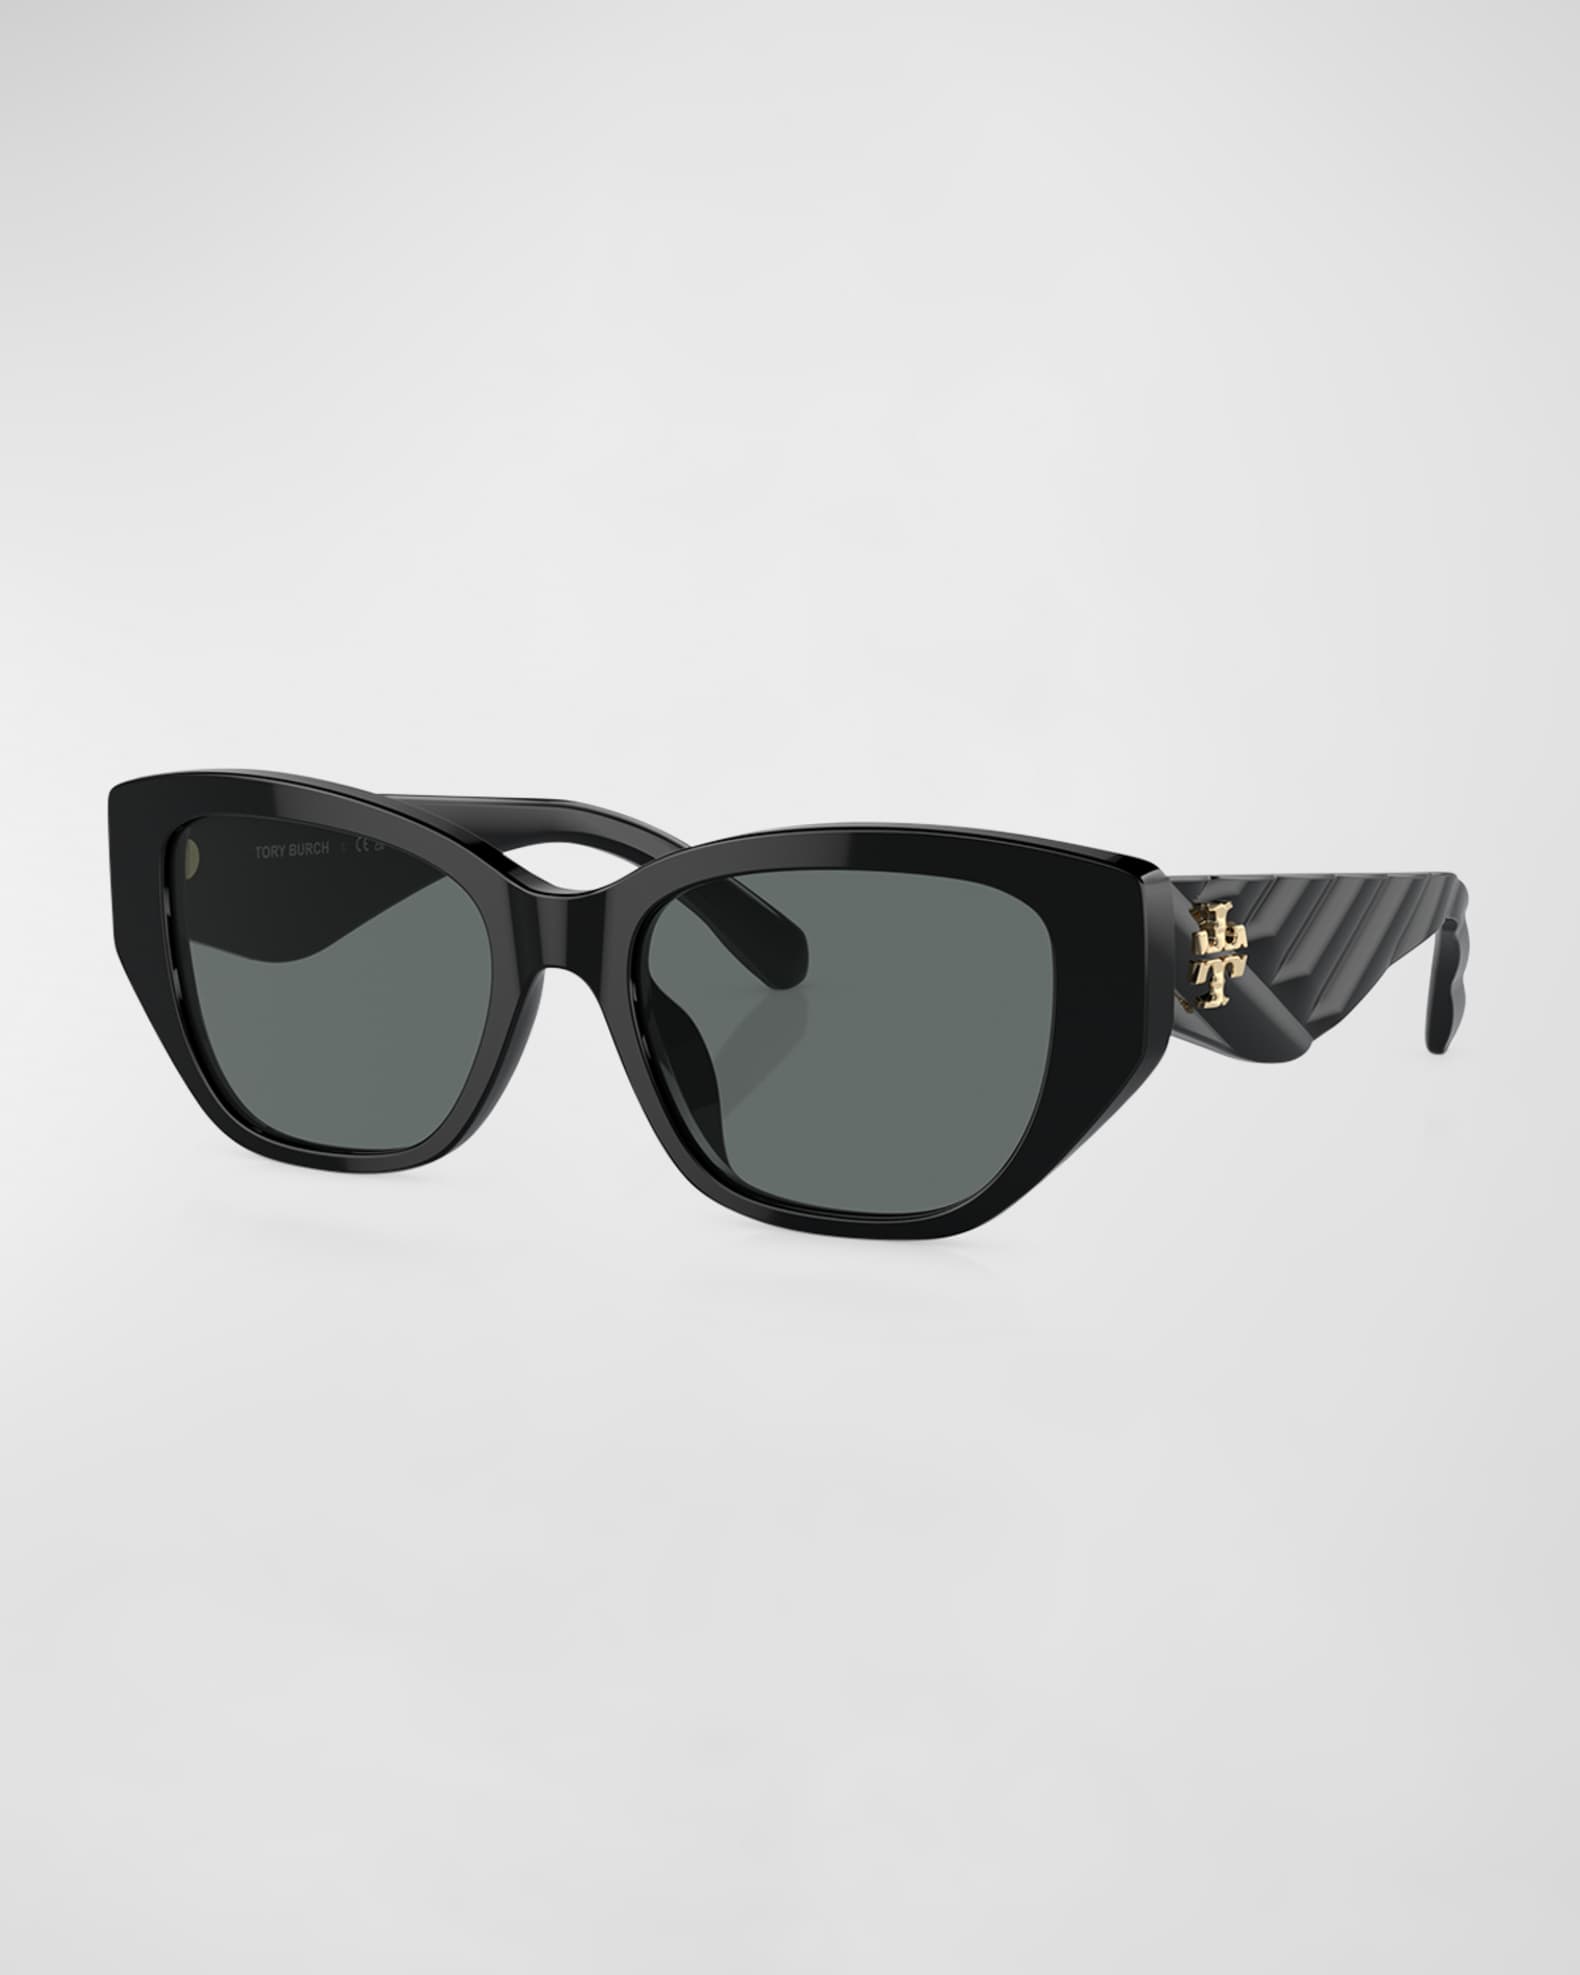 Louis Vuitton My Monogram Square Sunglasses Dark Tortoise Acetate & Metal. Size E